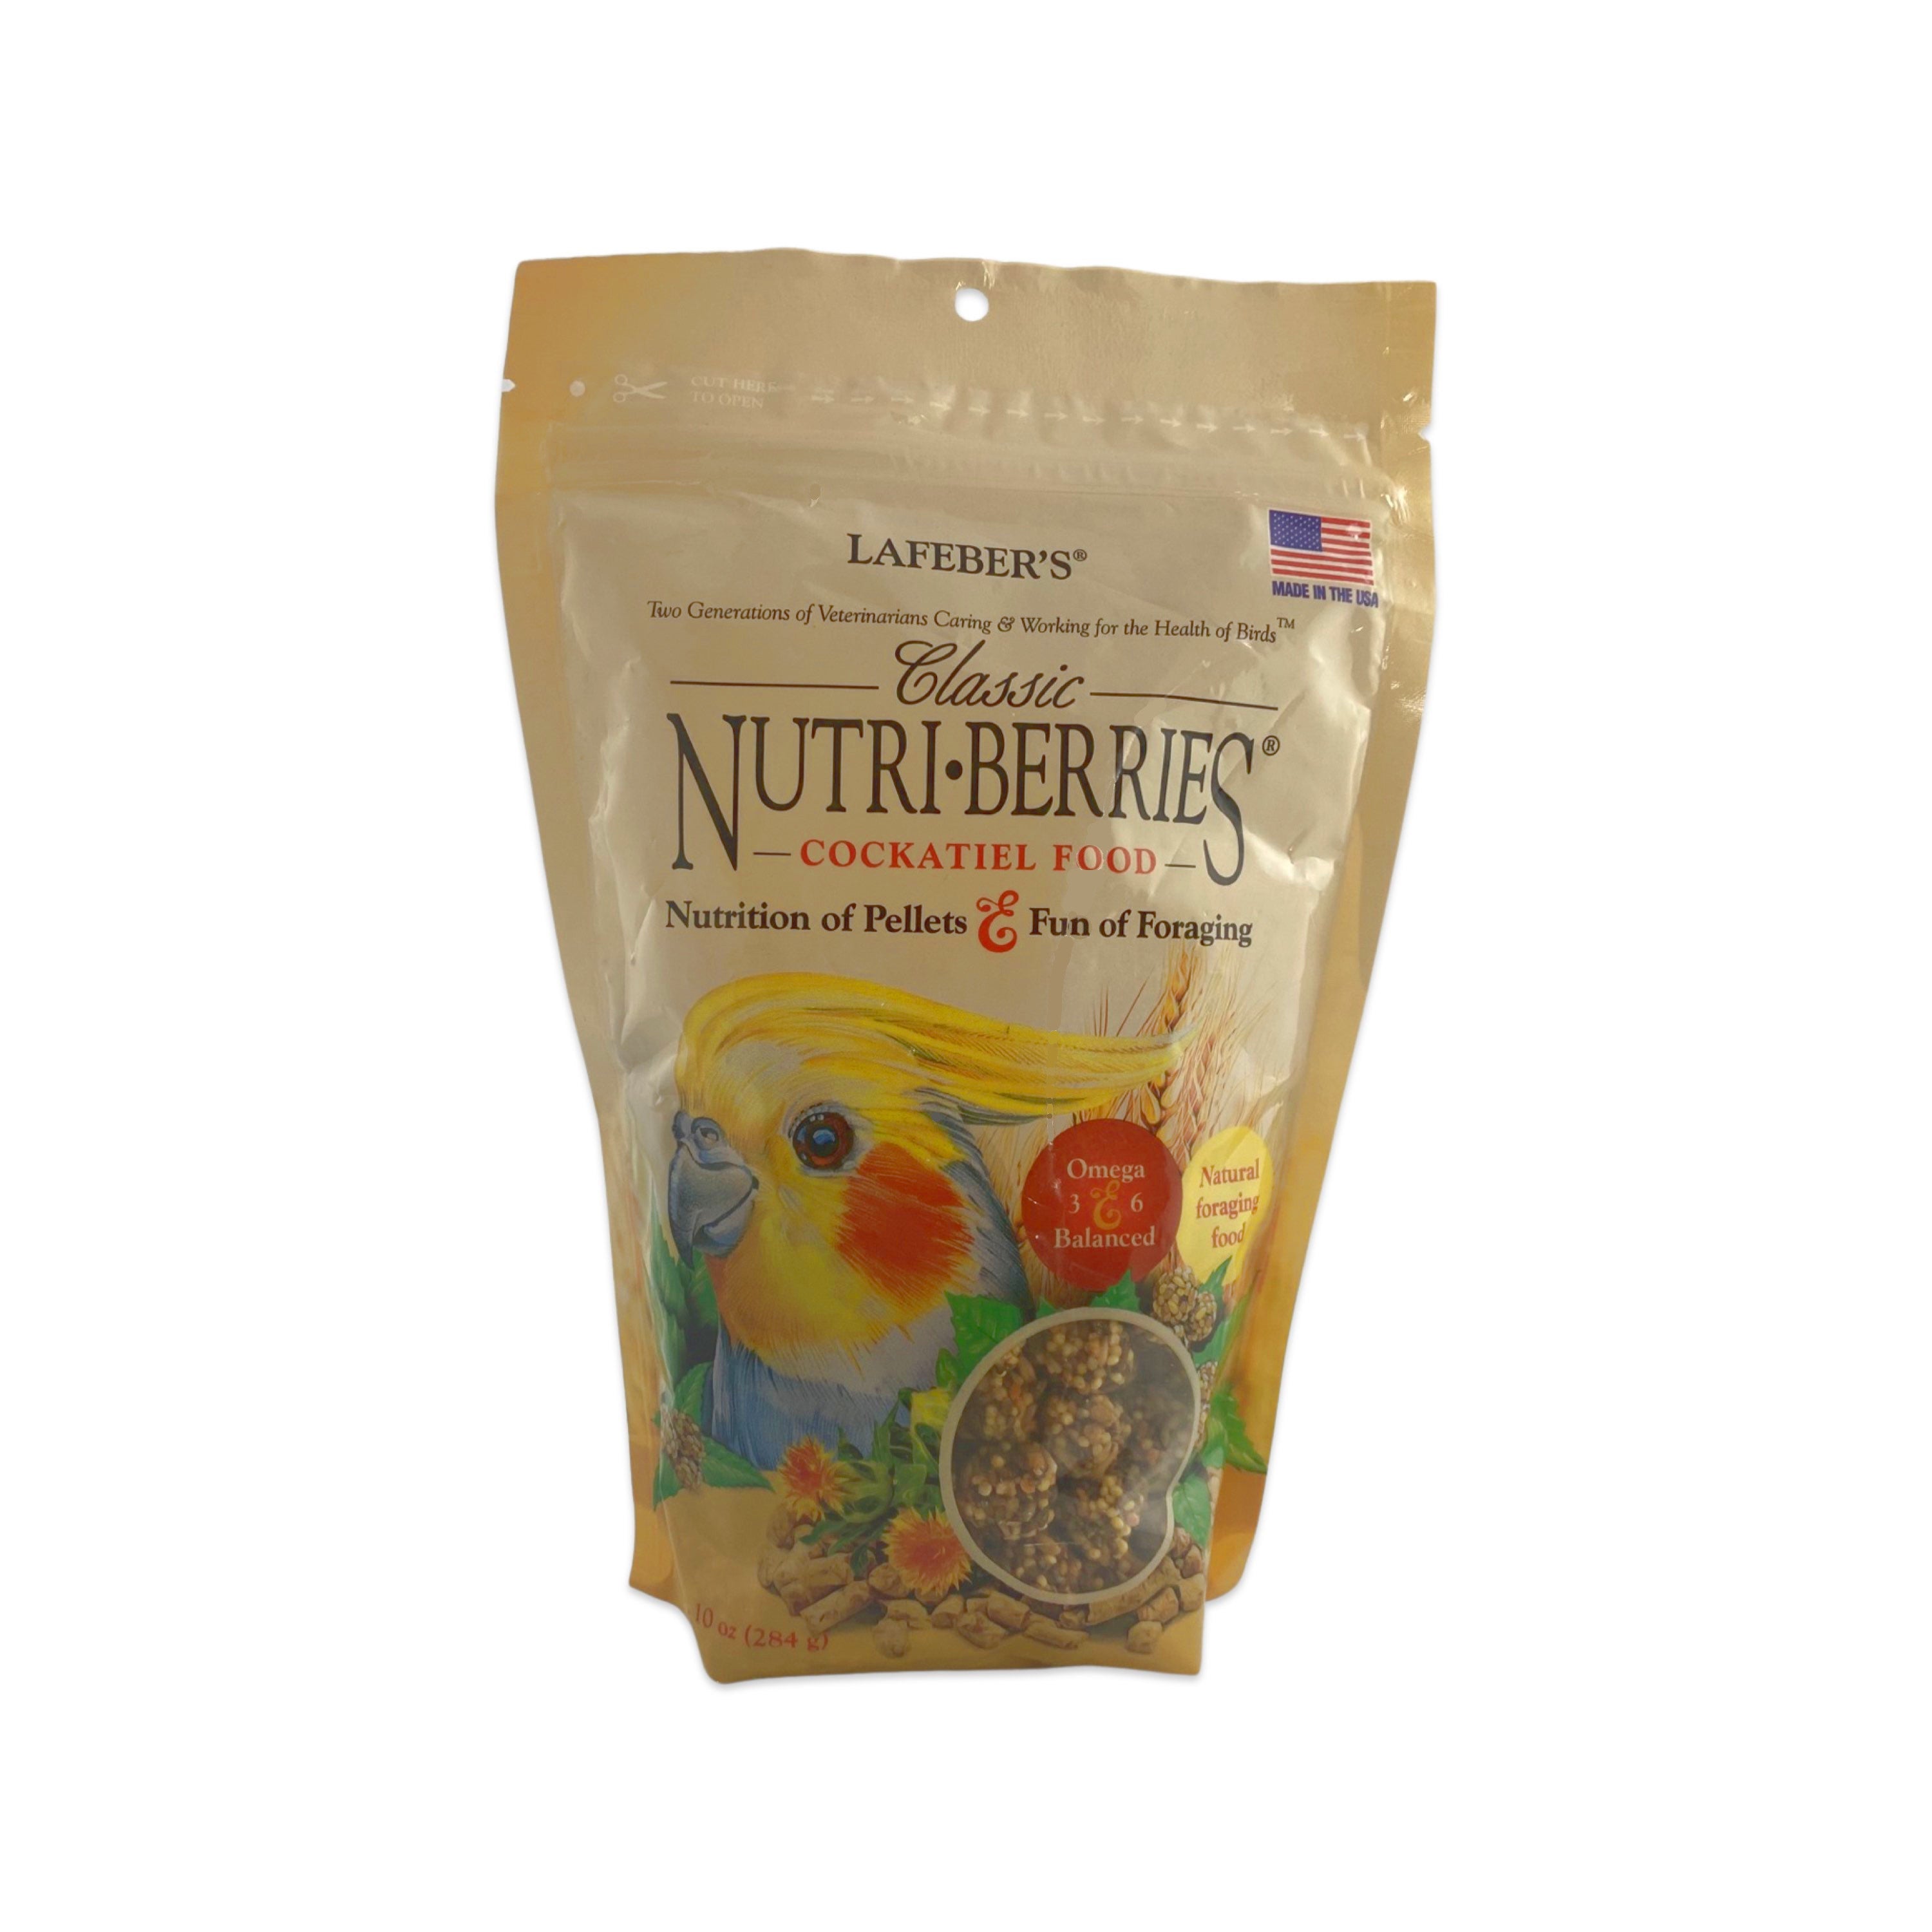 Lafeber’s Classic Nutri-Berries